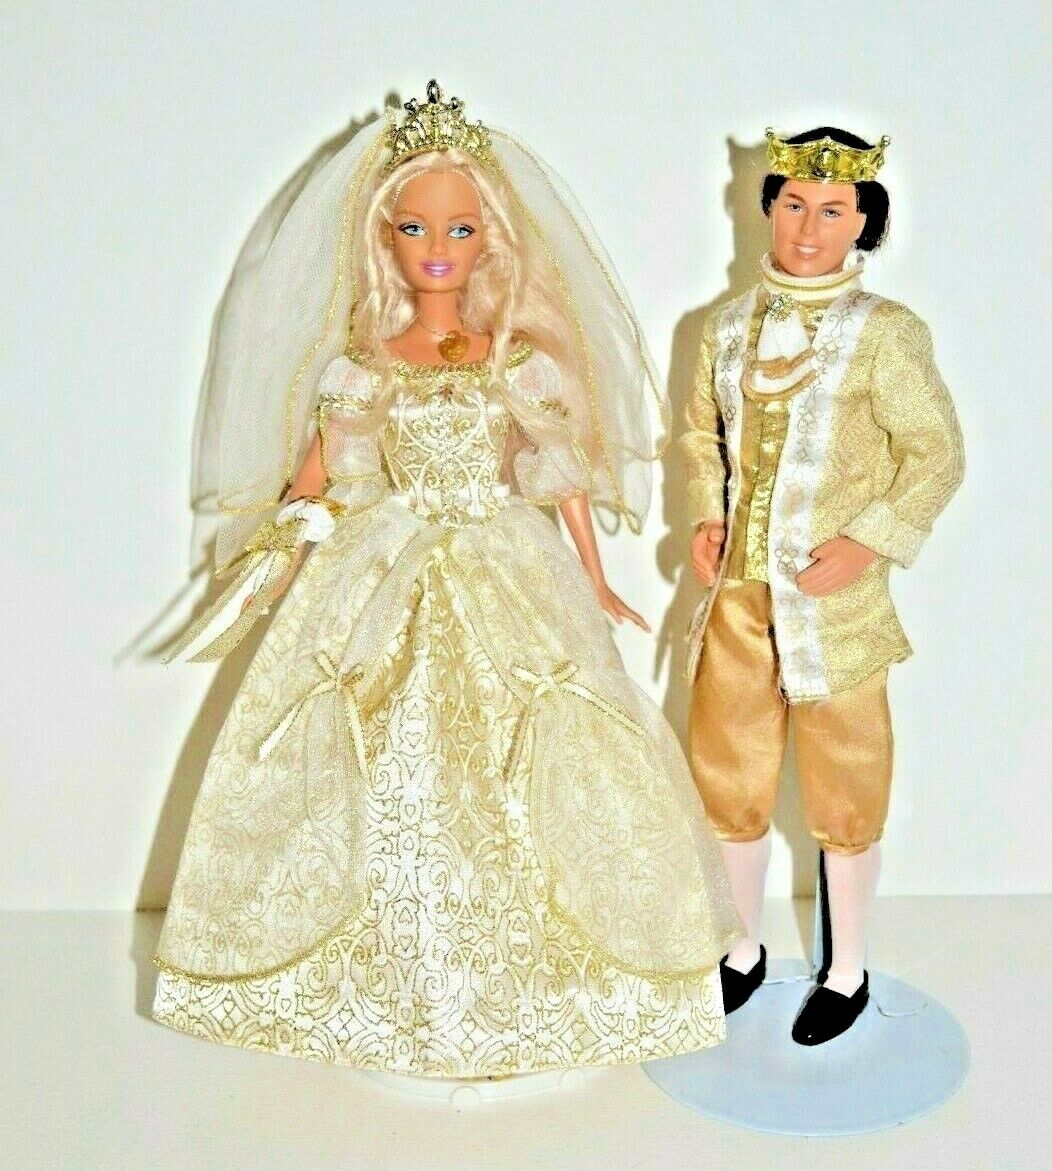 barbie princess bride doll